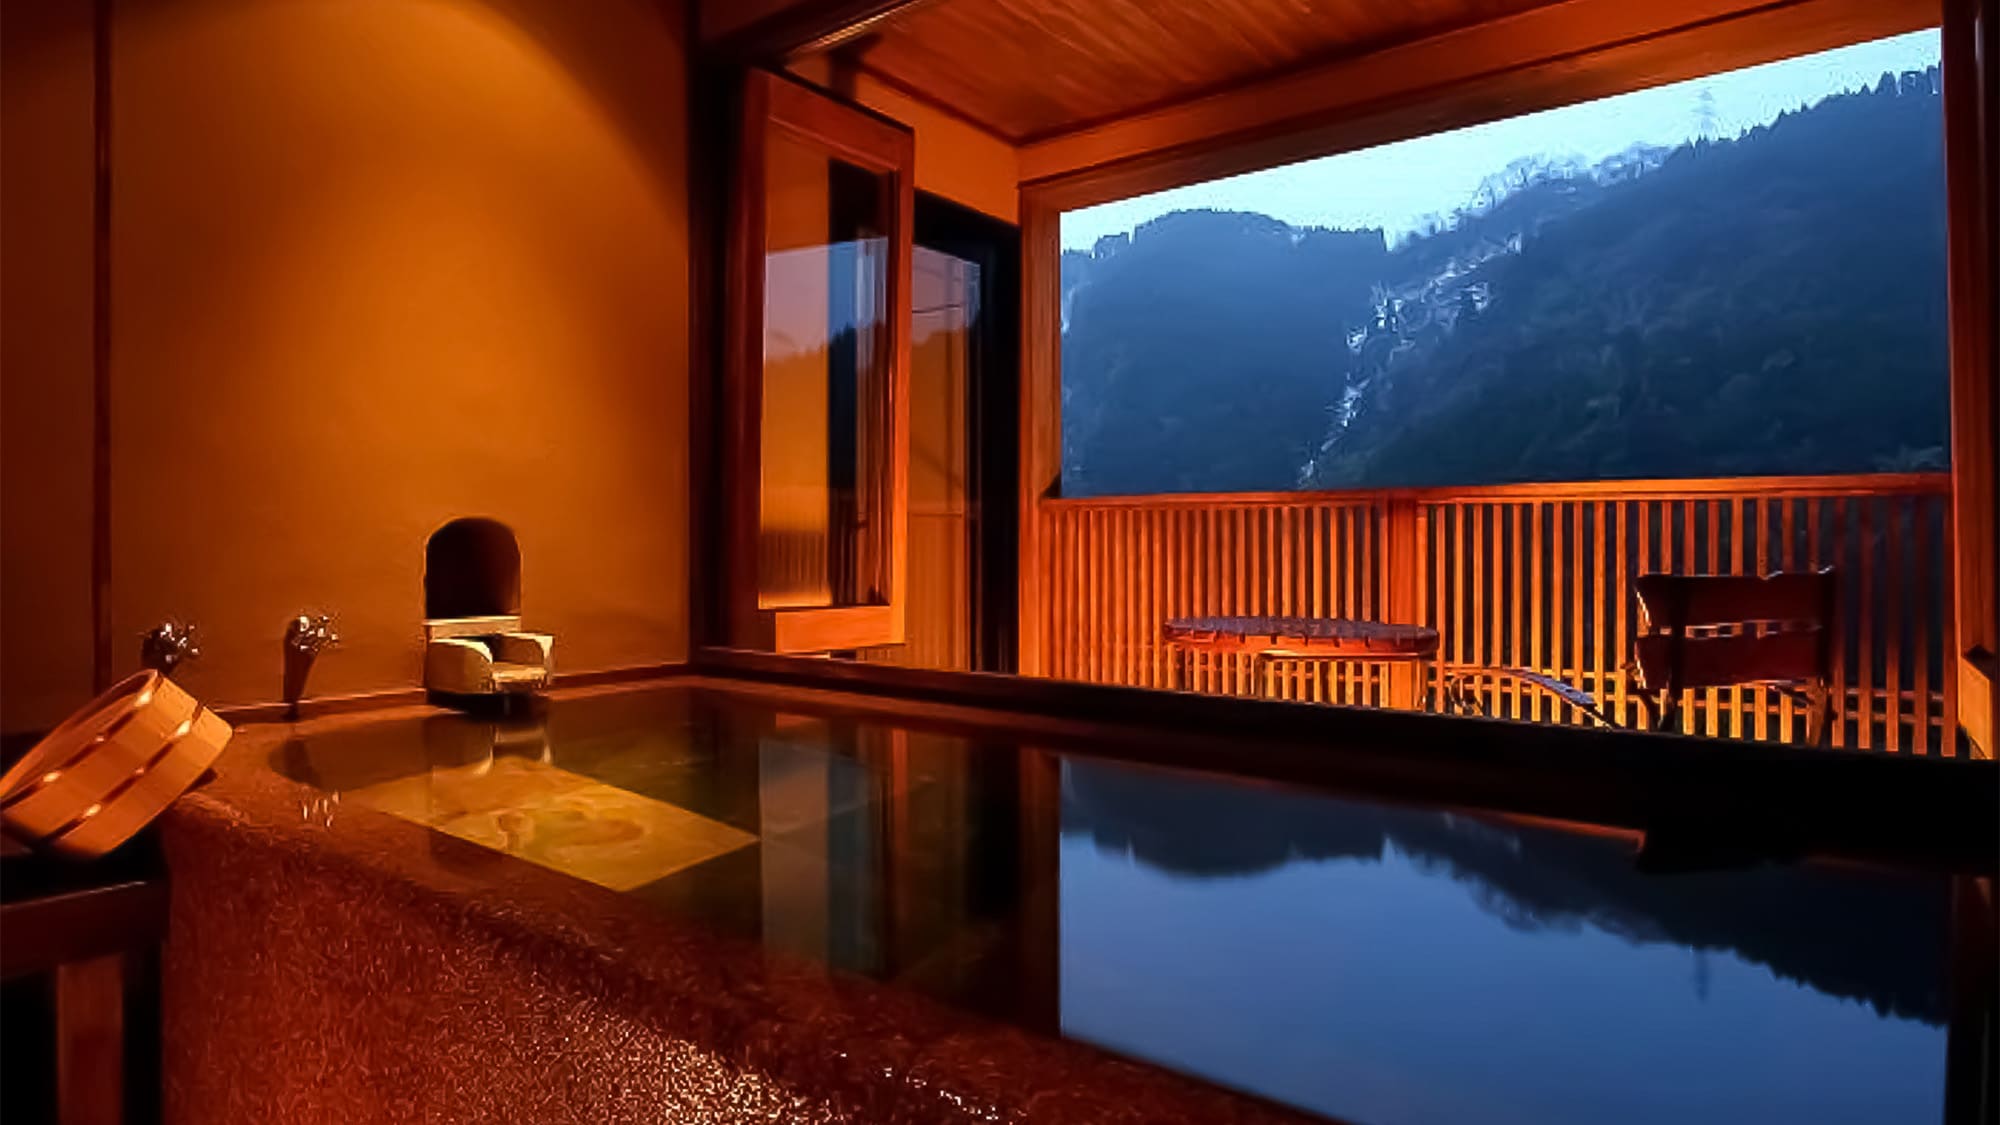 ・Japanese modern room 10 tatami mats with semi-open-air bath